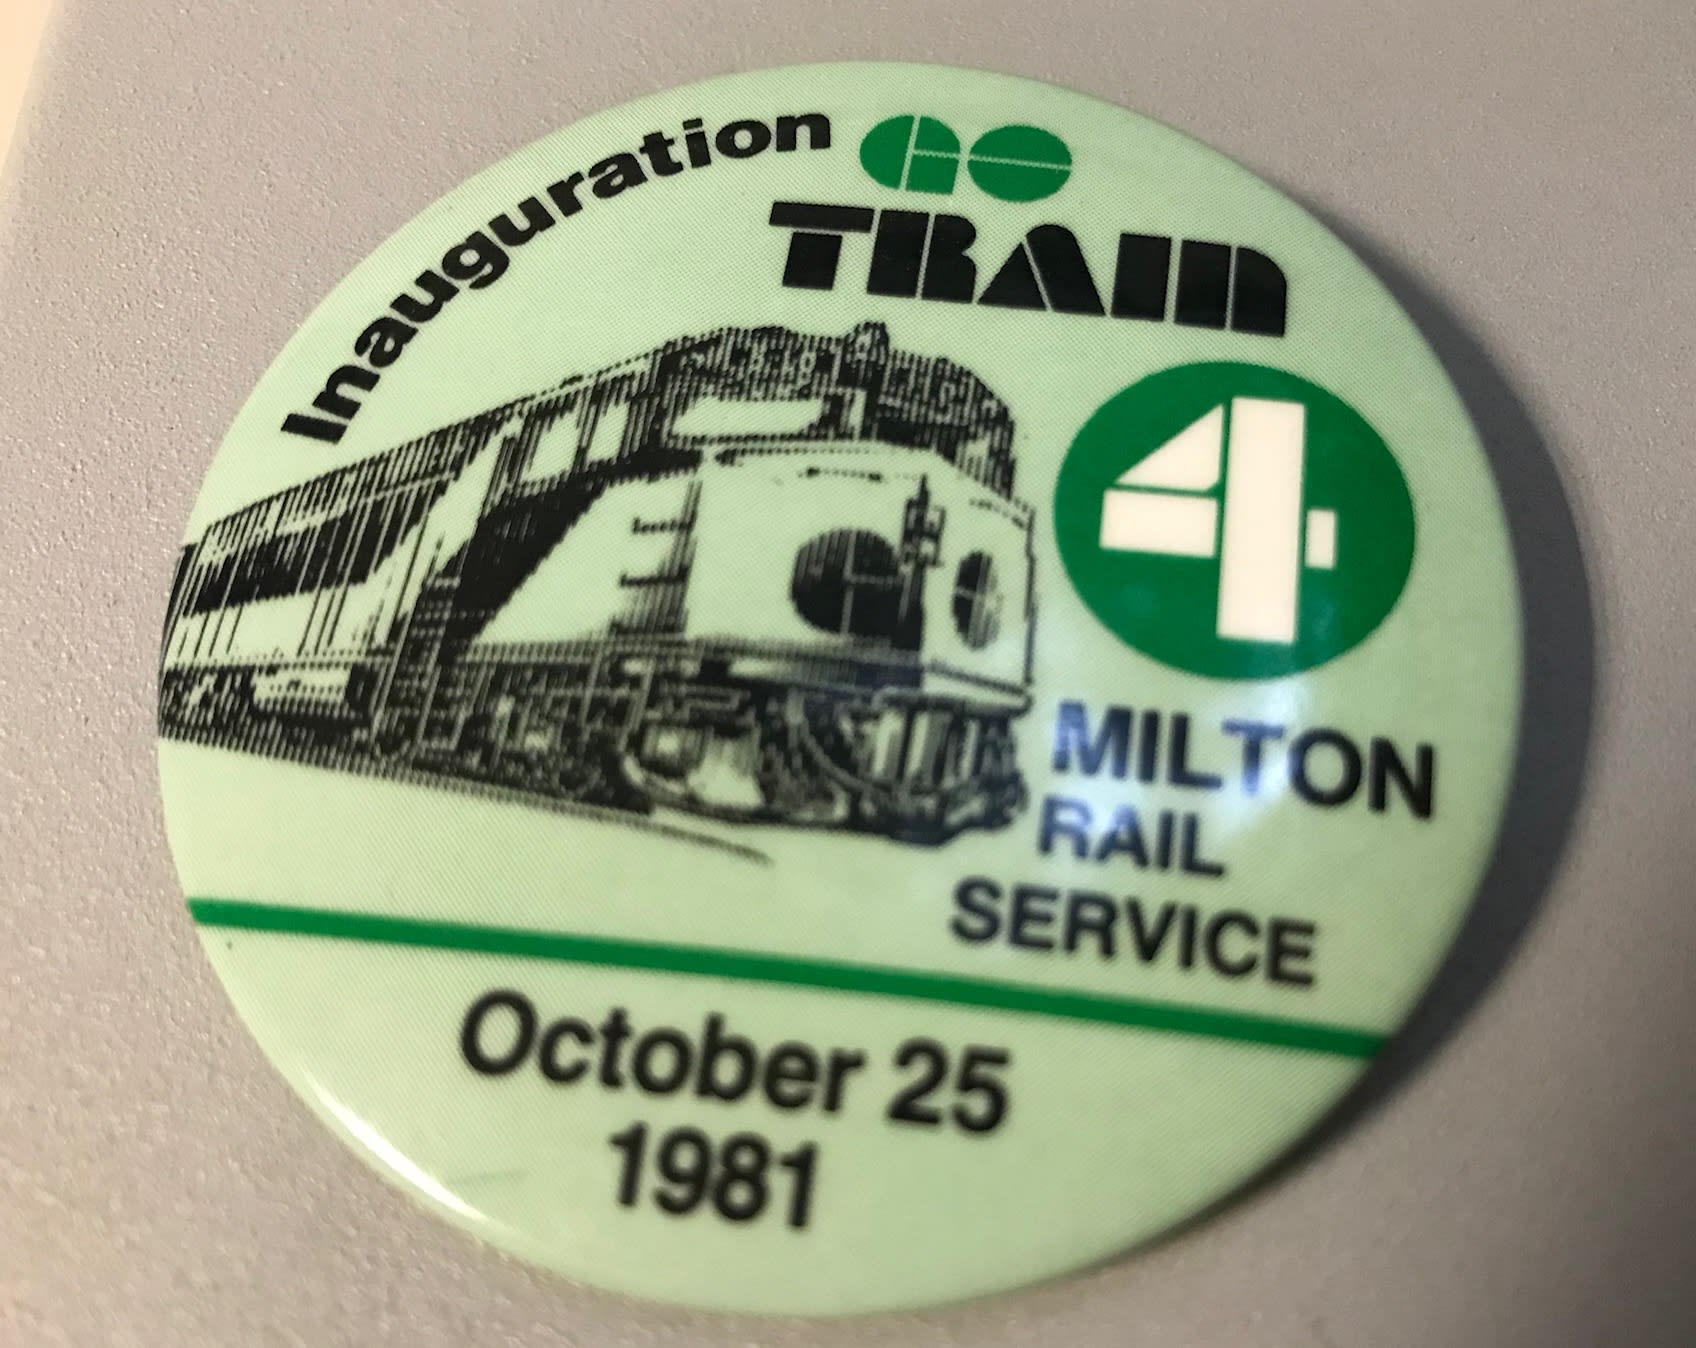 Photo shows a button that says "October 25, 1981 - Milton rail service'.